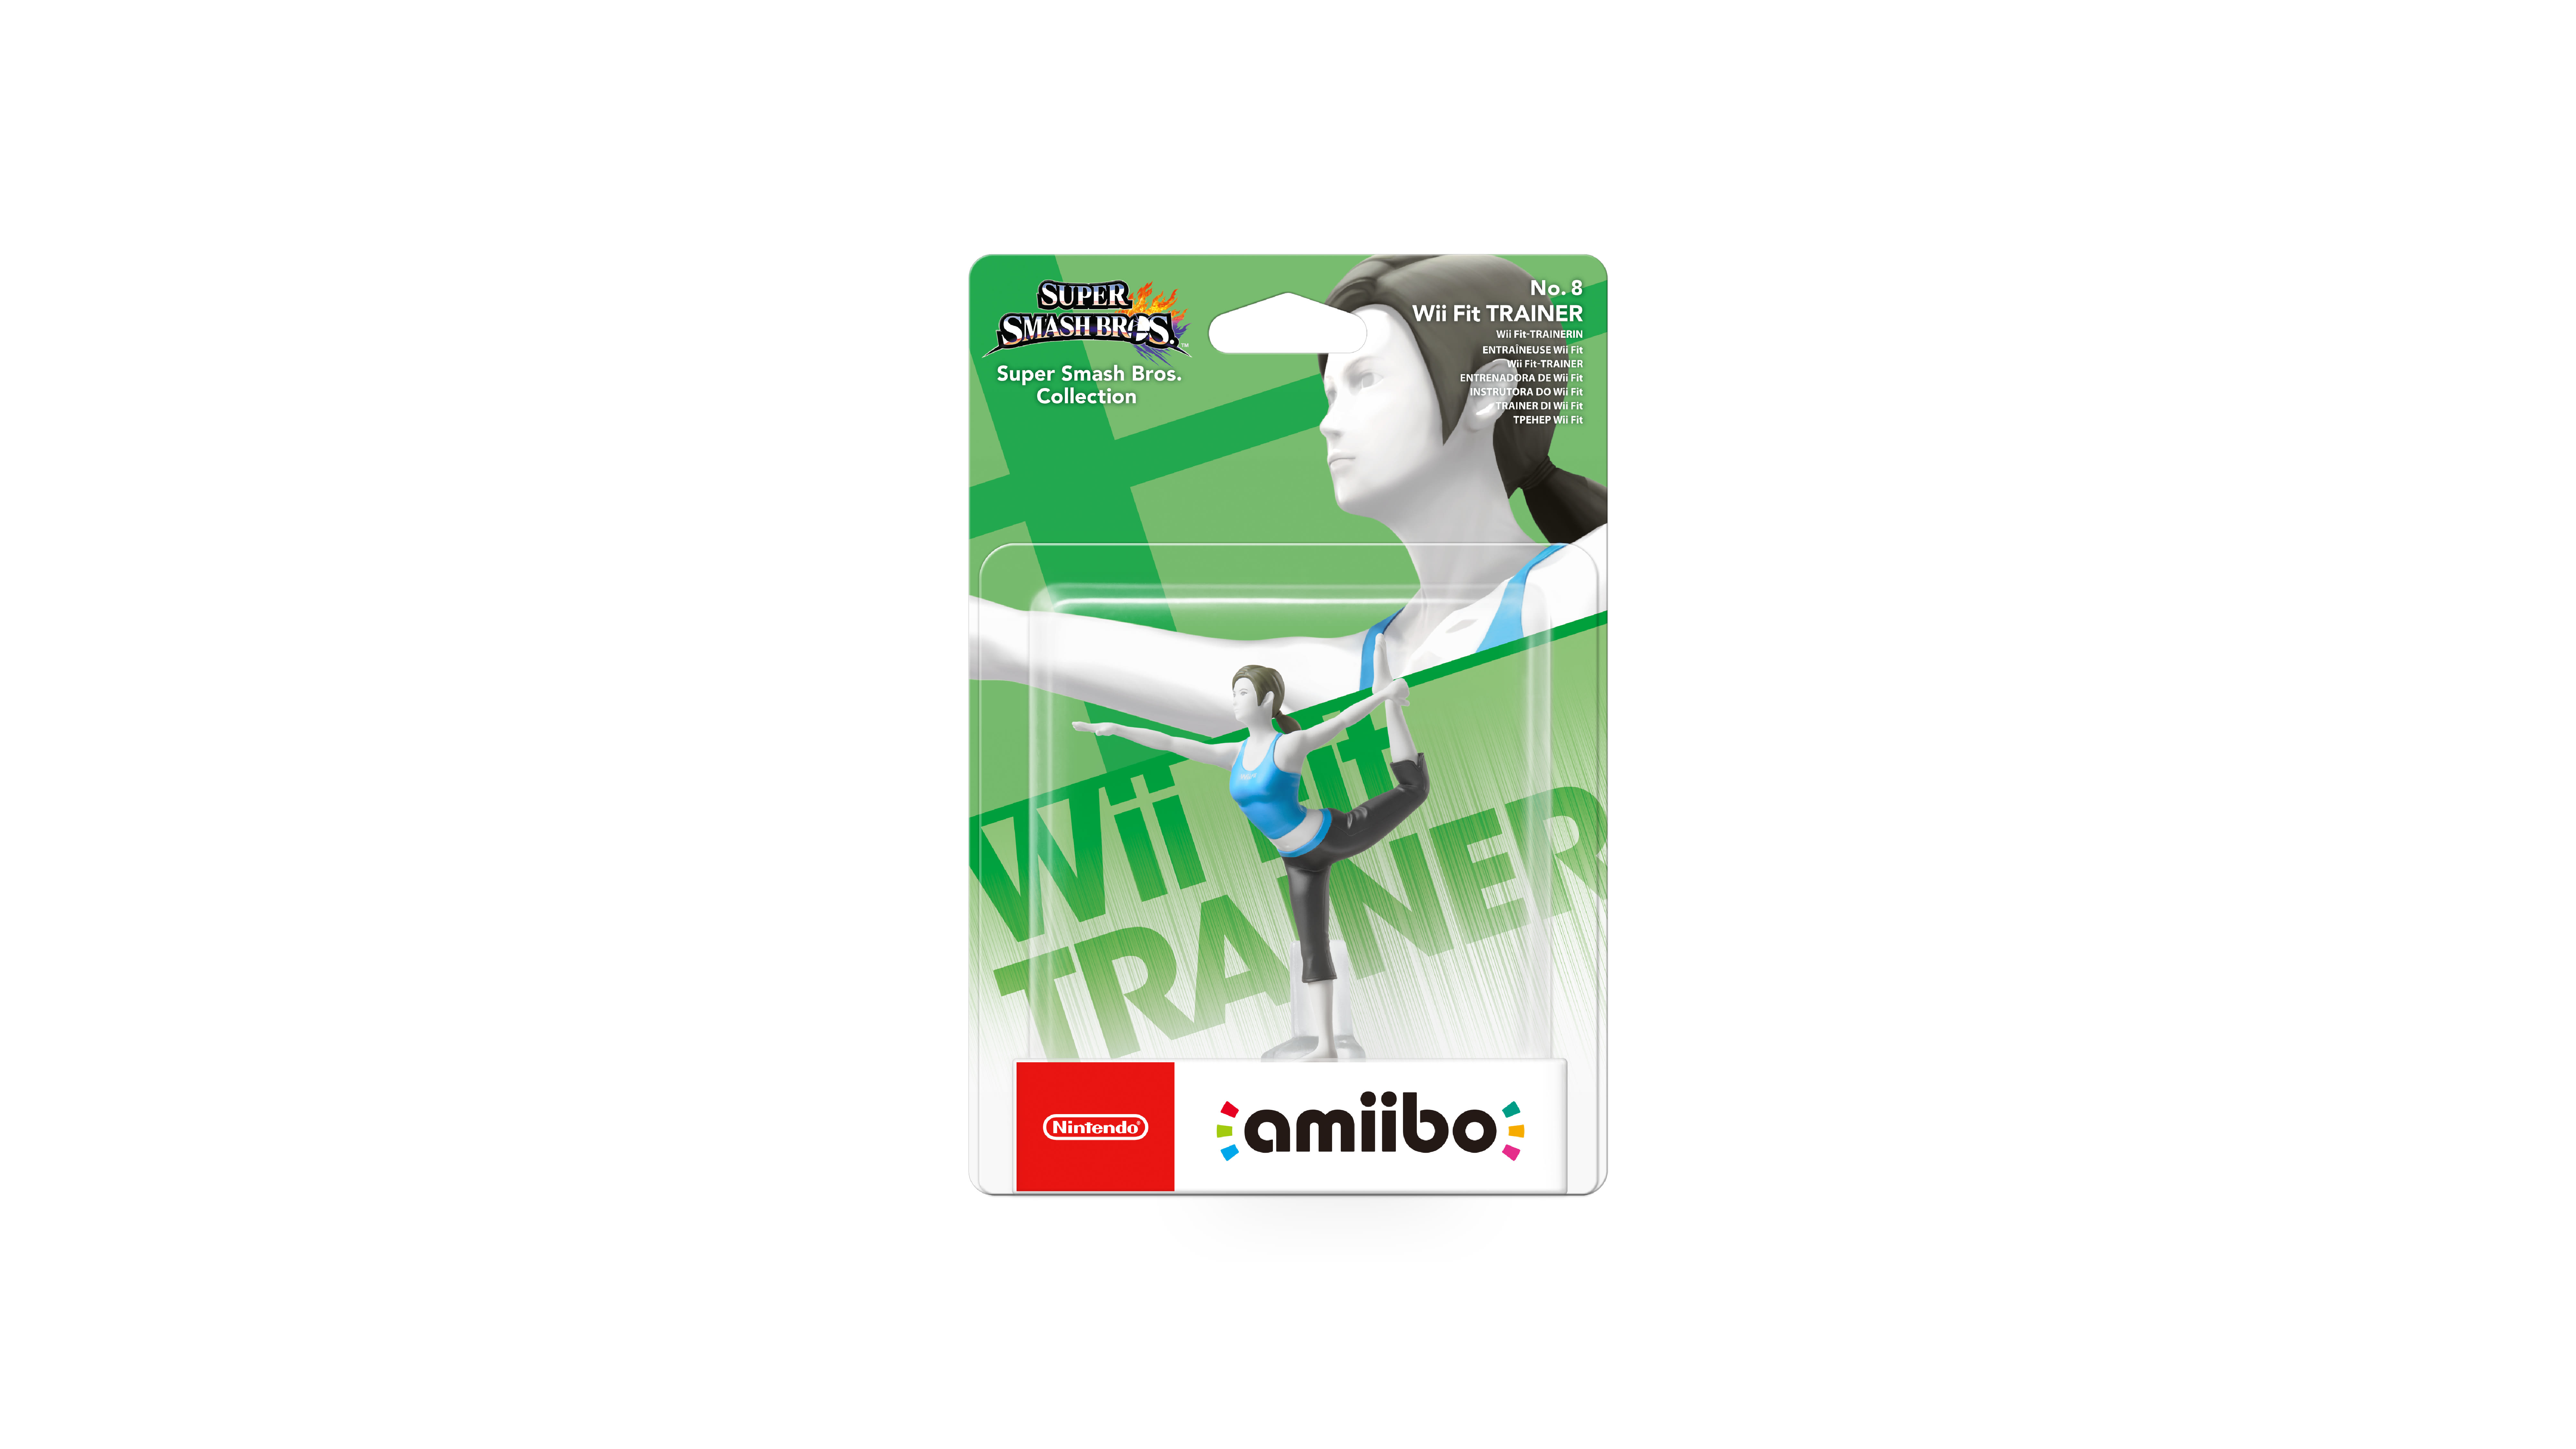 Wii Fit Trainer amiibo Packshot